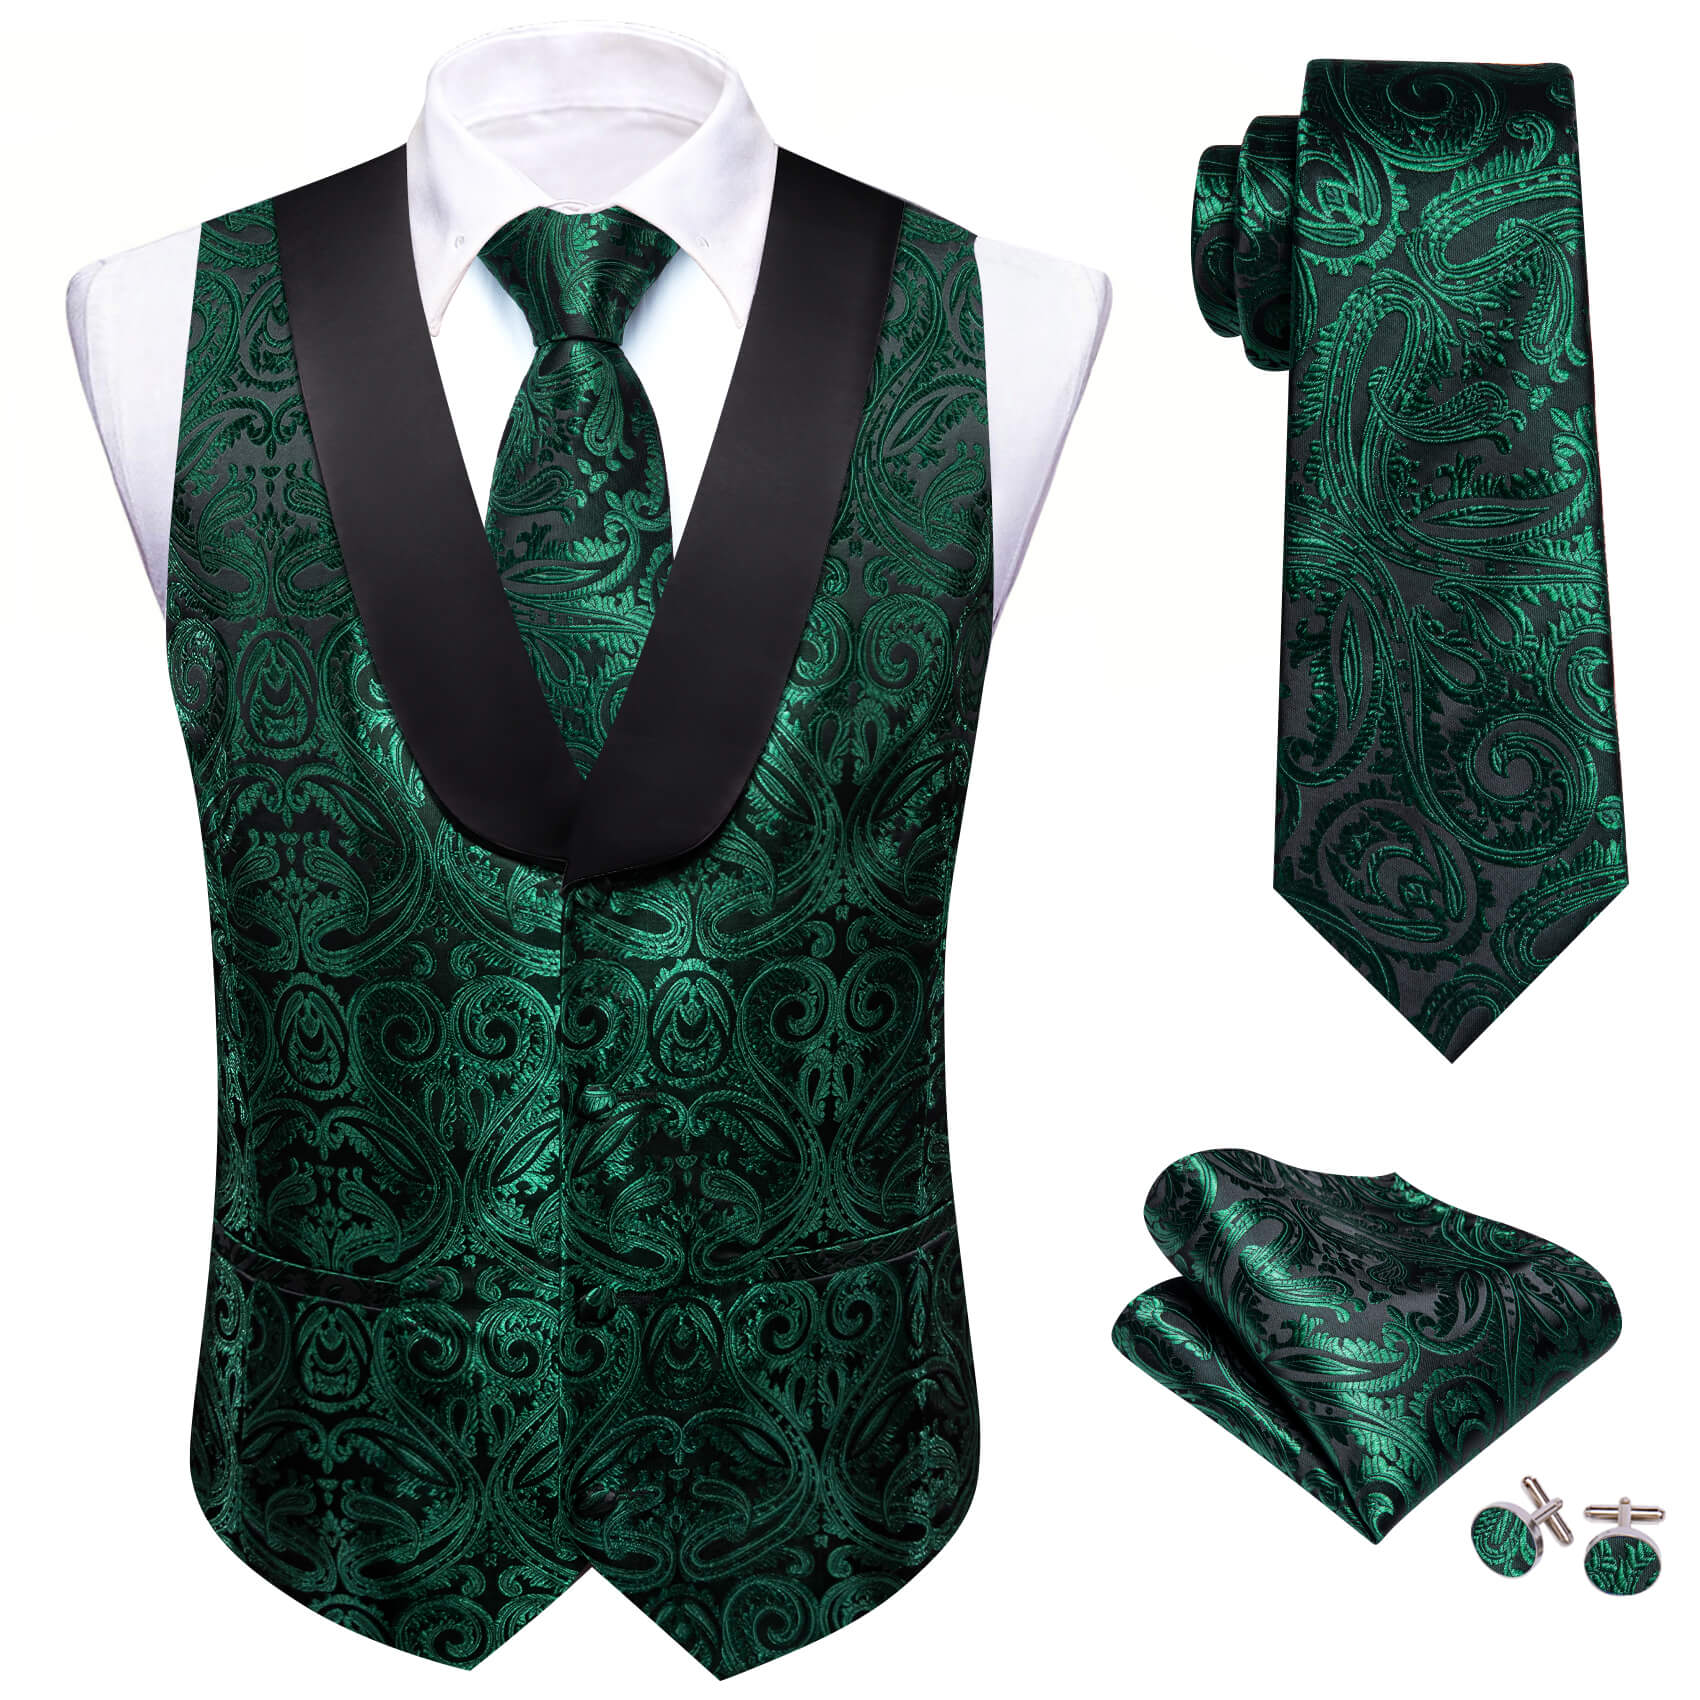 Barry.wang Shawl Collar Vest Dark Green Jacquard Woven Paisley Men's Silk Vest Tie Set